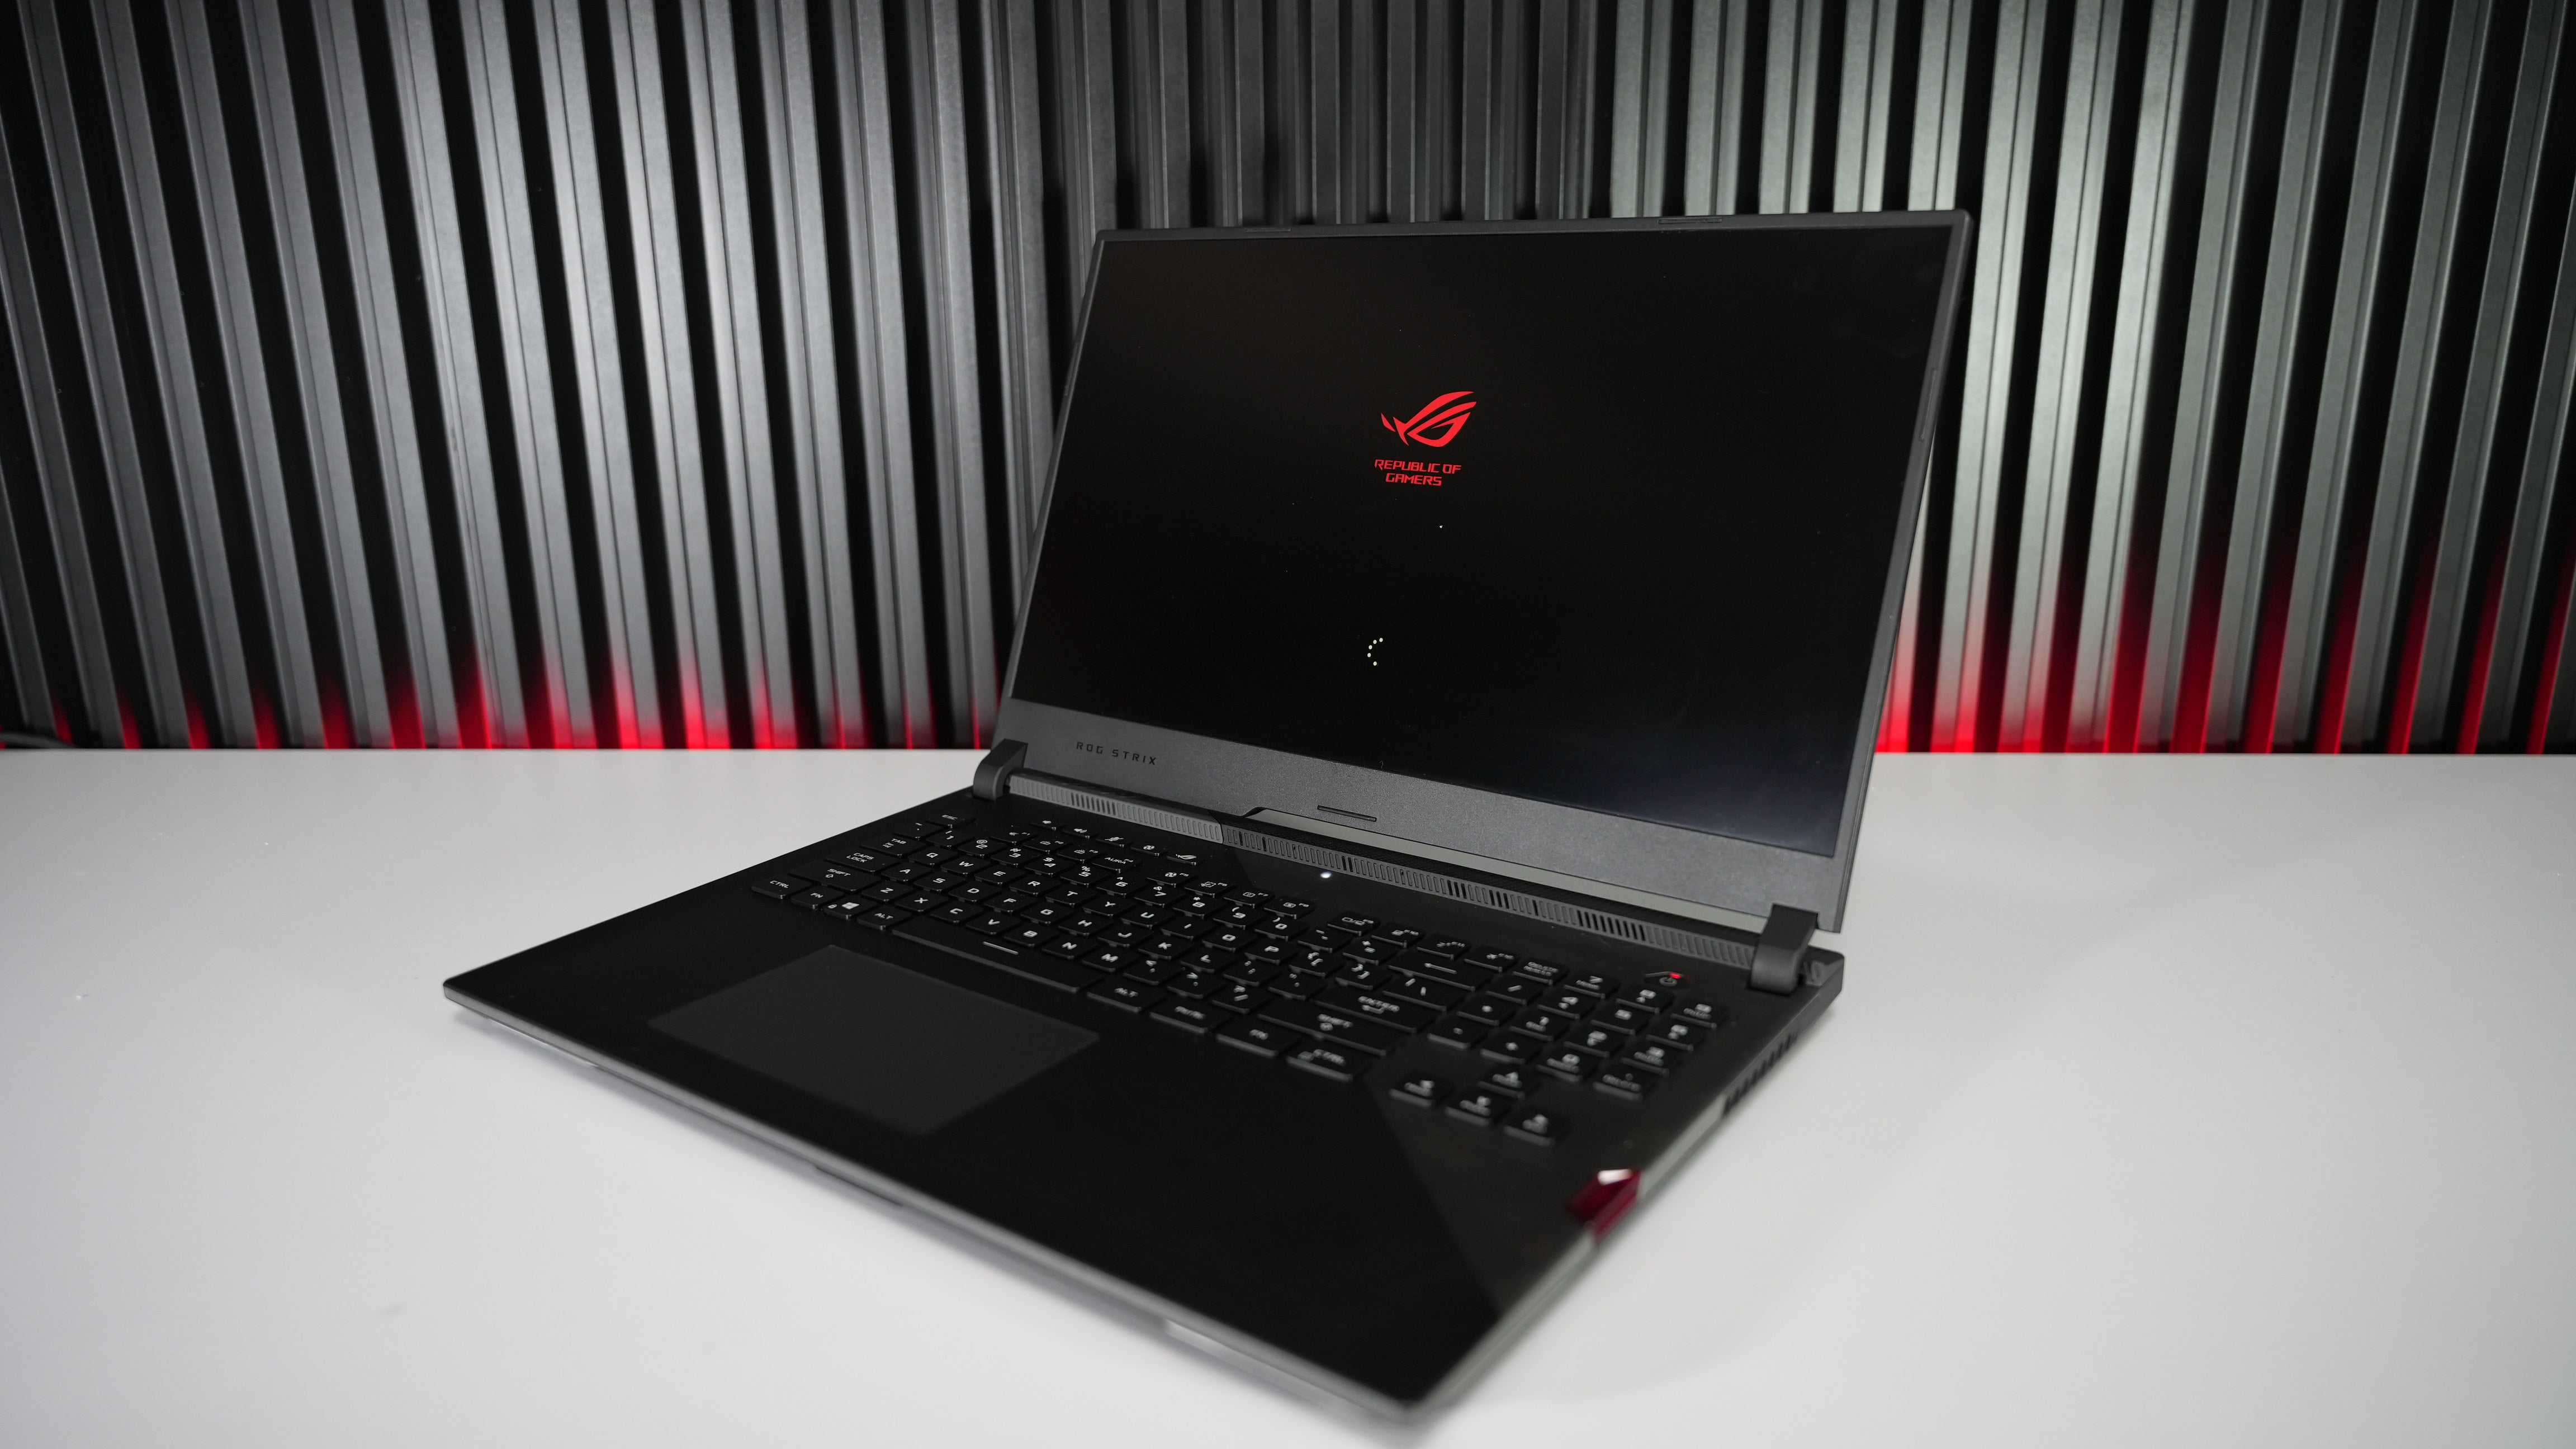 Ryzen 9 5900HX + RTX 3080 Gaming Laptop (Free Shipping)